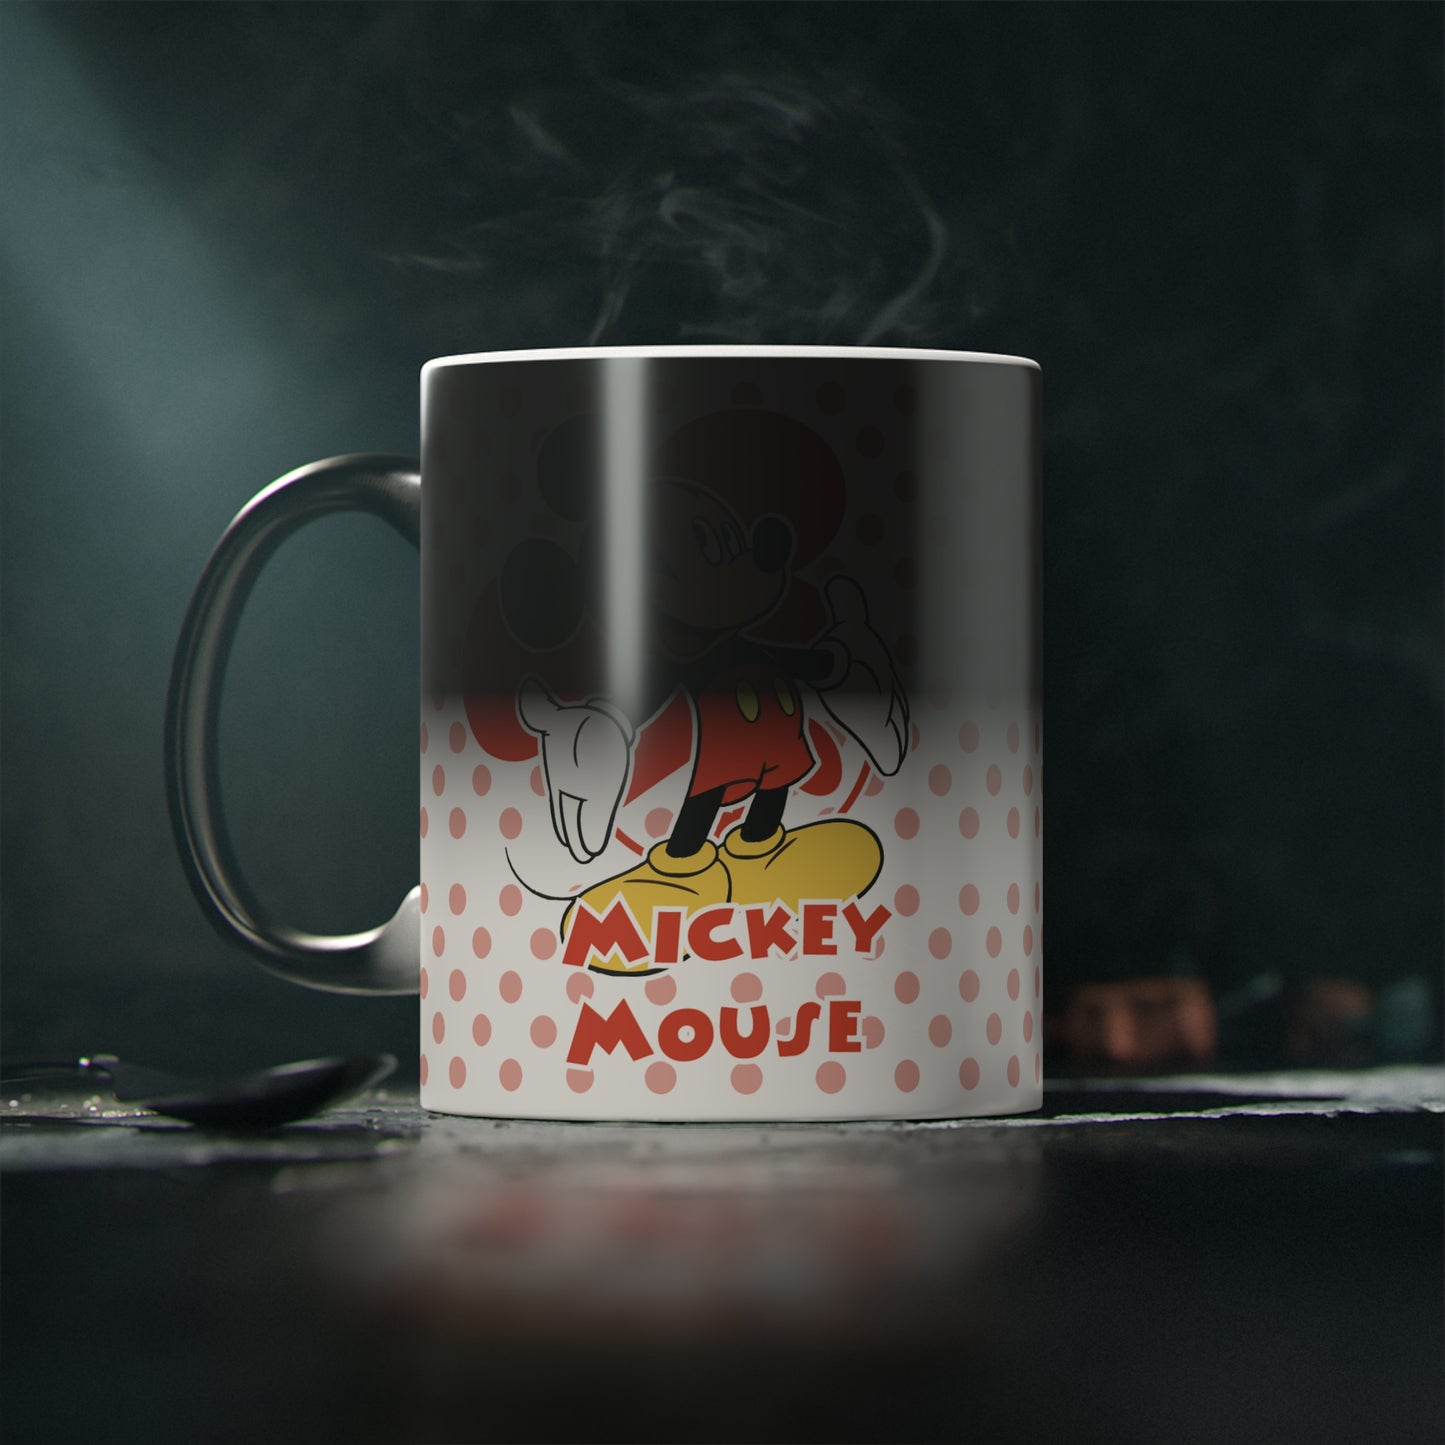 Mickey Mouse Loving Plush Gift Kit + Personalized Magic Mug